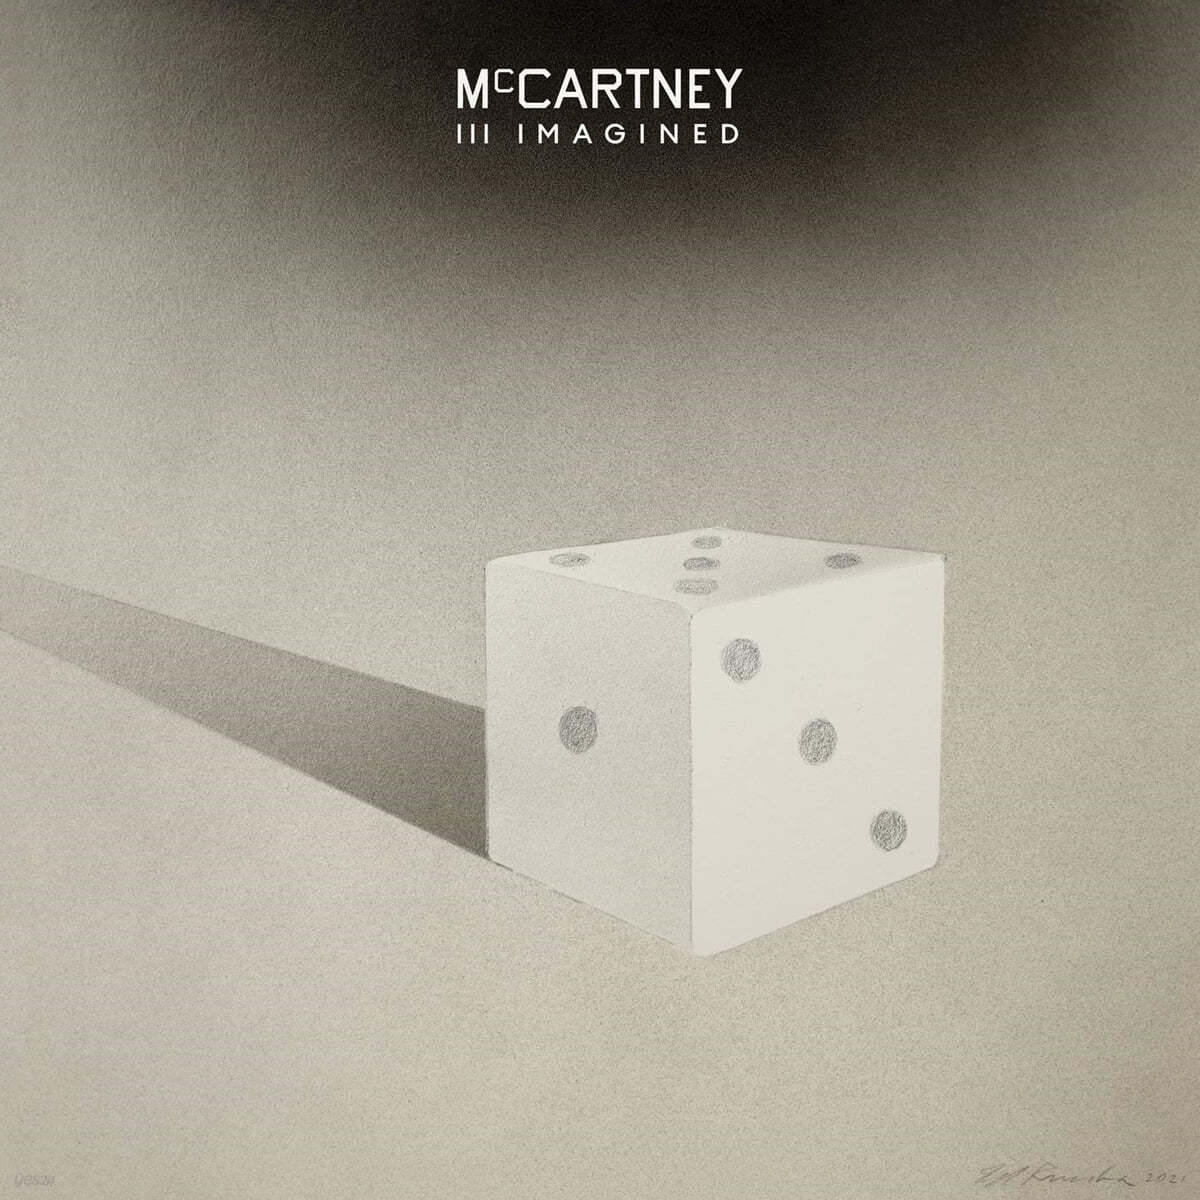 Paul McCartney (폴 매카트니) - McCartney III Imagined [2LP] 